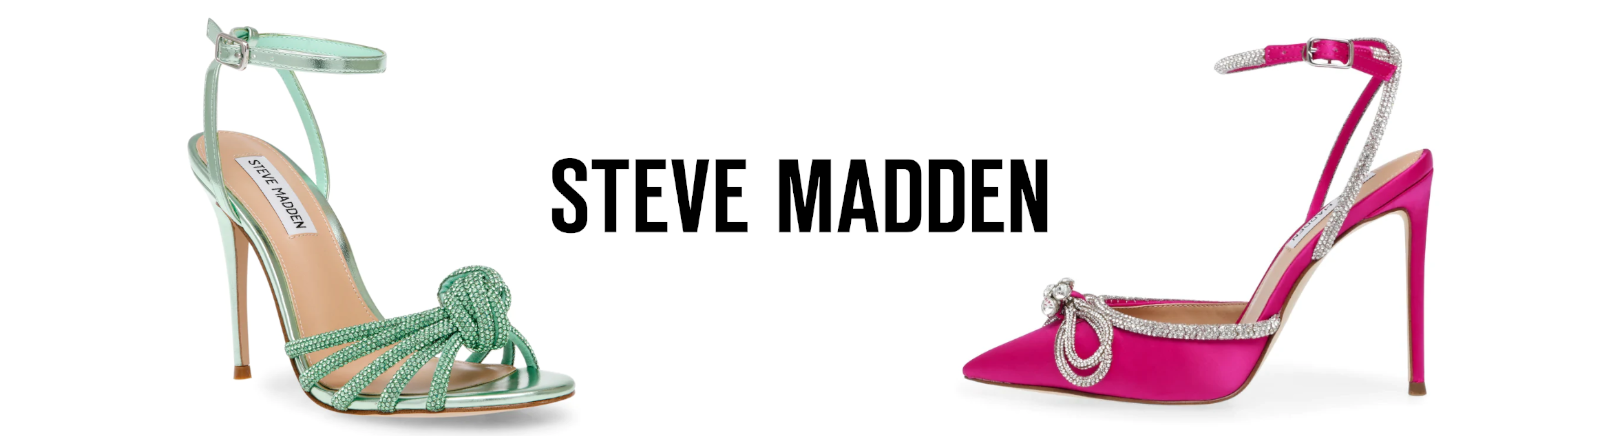 Juppen: Steve Madden Boots für Damen kaufen online shoppen